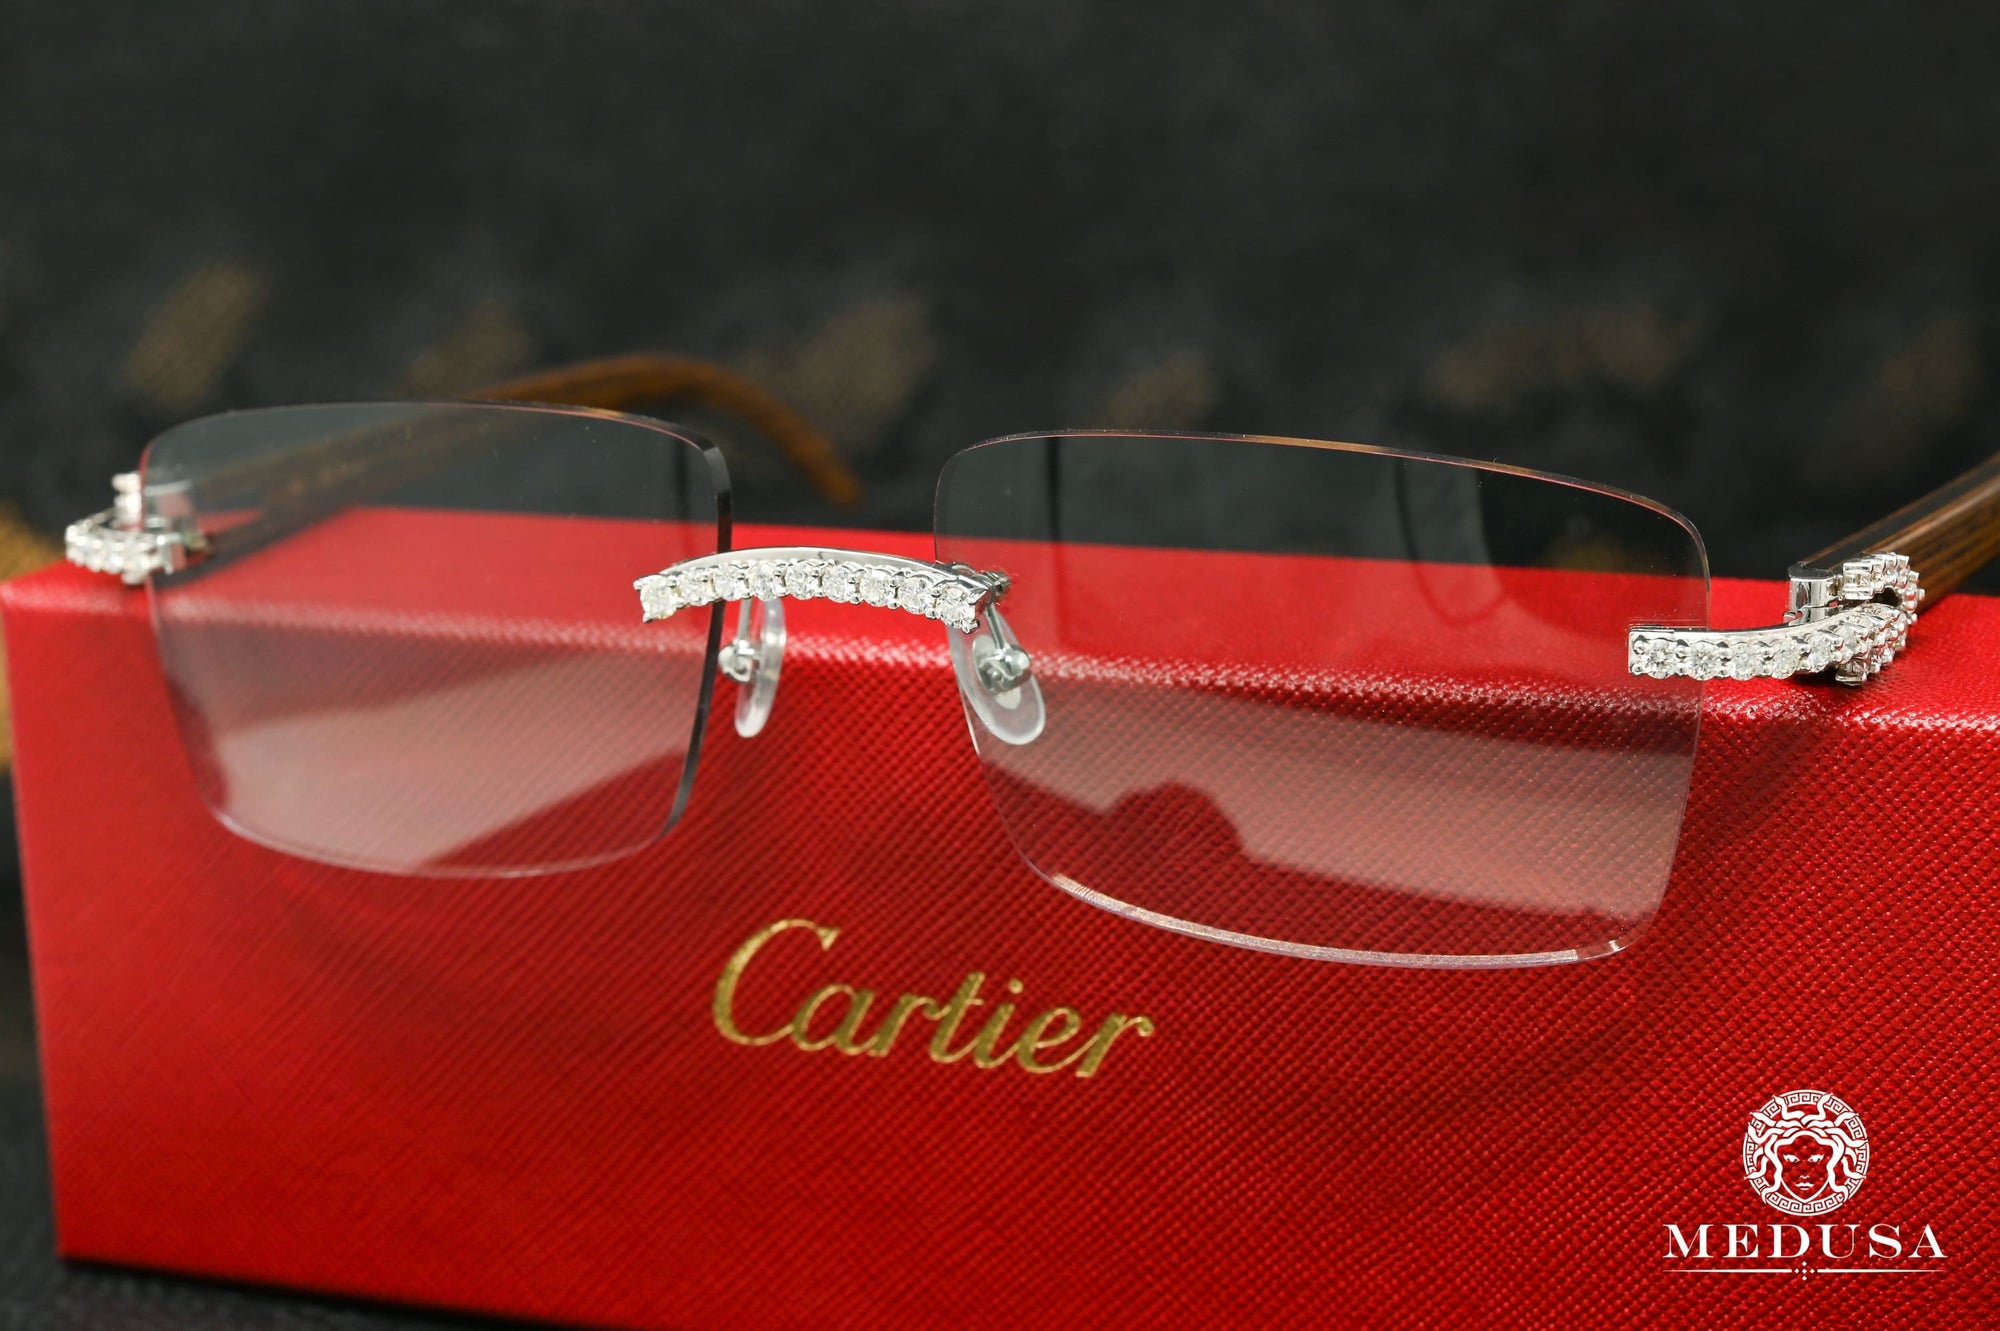 Cartier glasses | Cartier Signature C Men's Glasses | Silver & Wood Big Rock Stainless